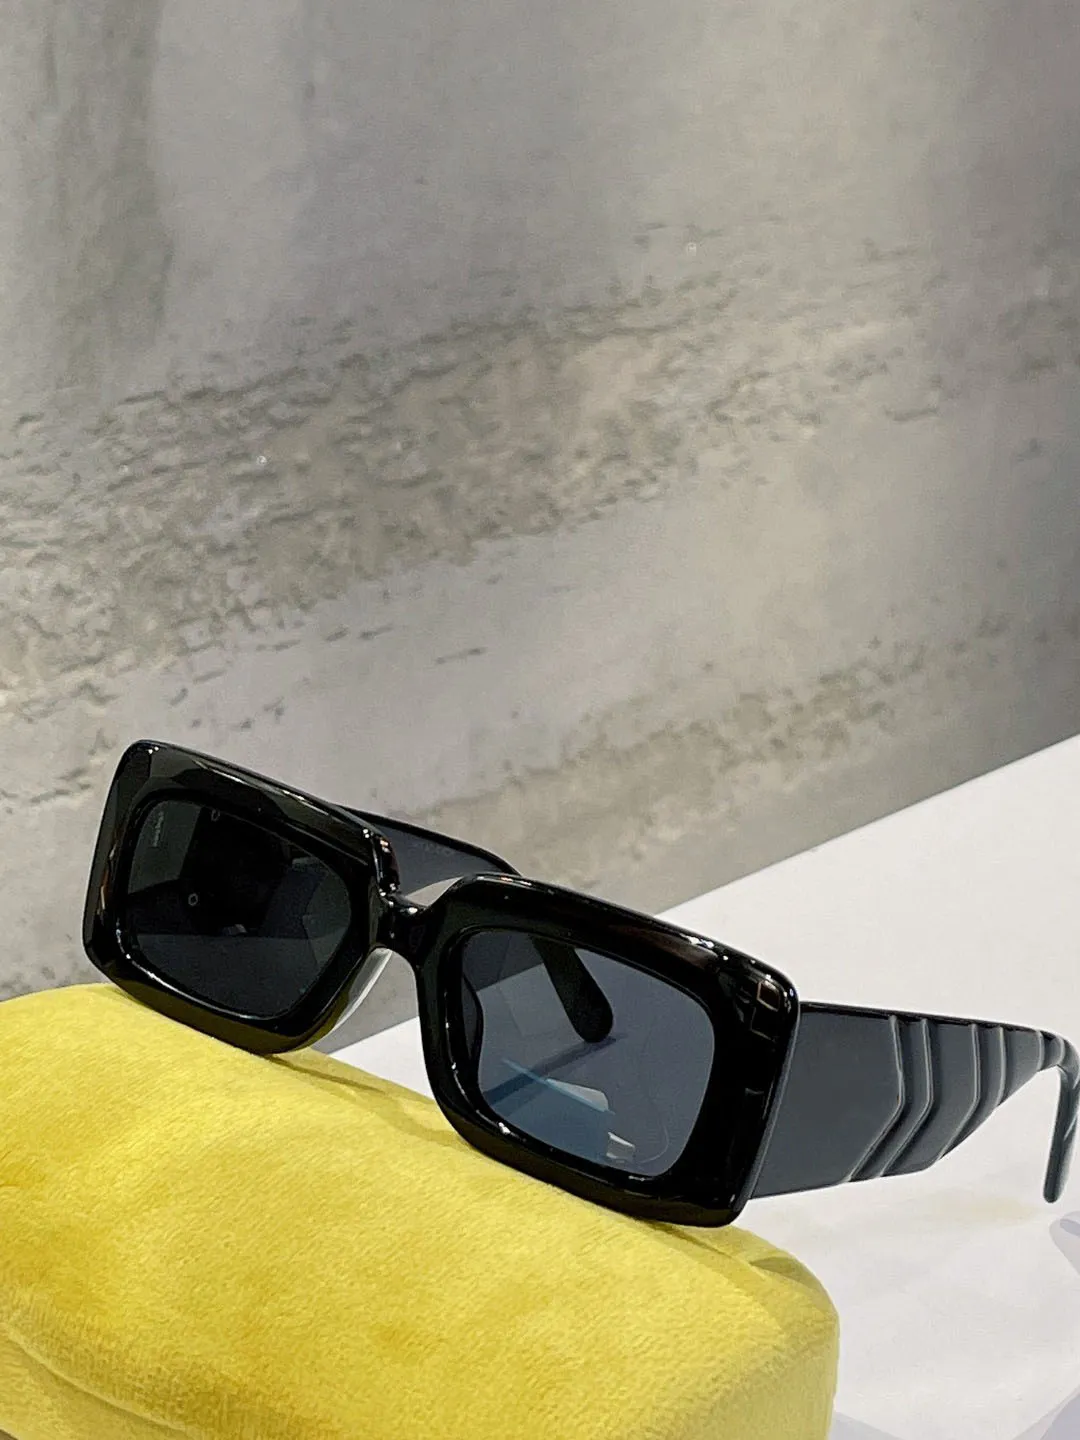 Adita G 0811S Top Original high quality Designer Sunglasses for men famous fashionable Classic retro luxury brand eyeglass fashion2681